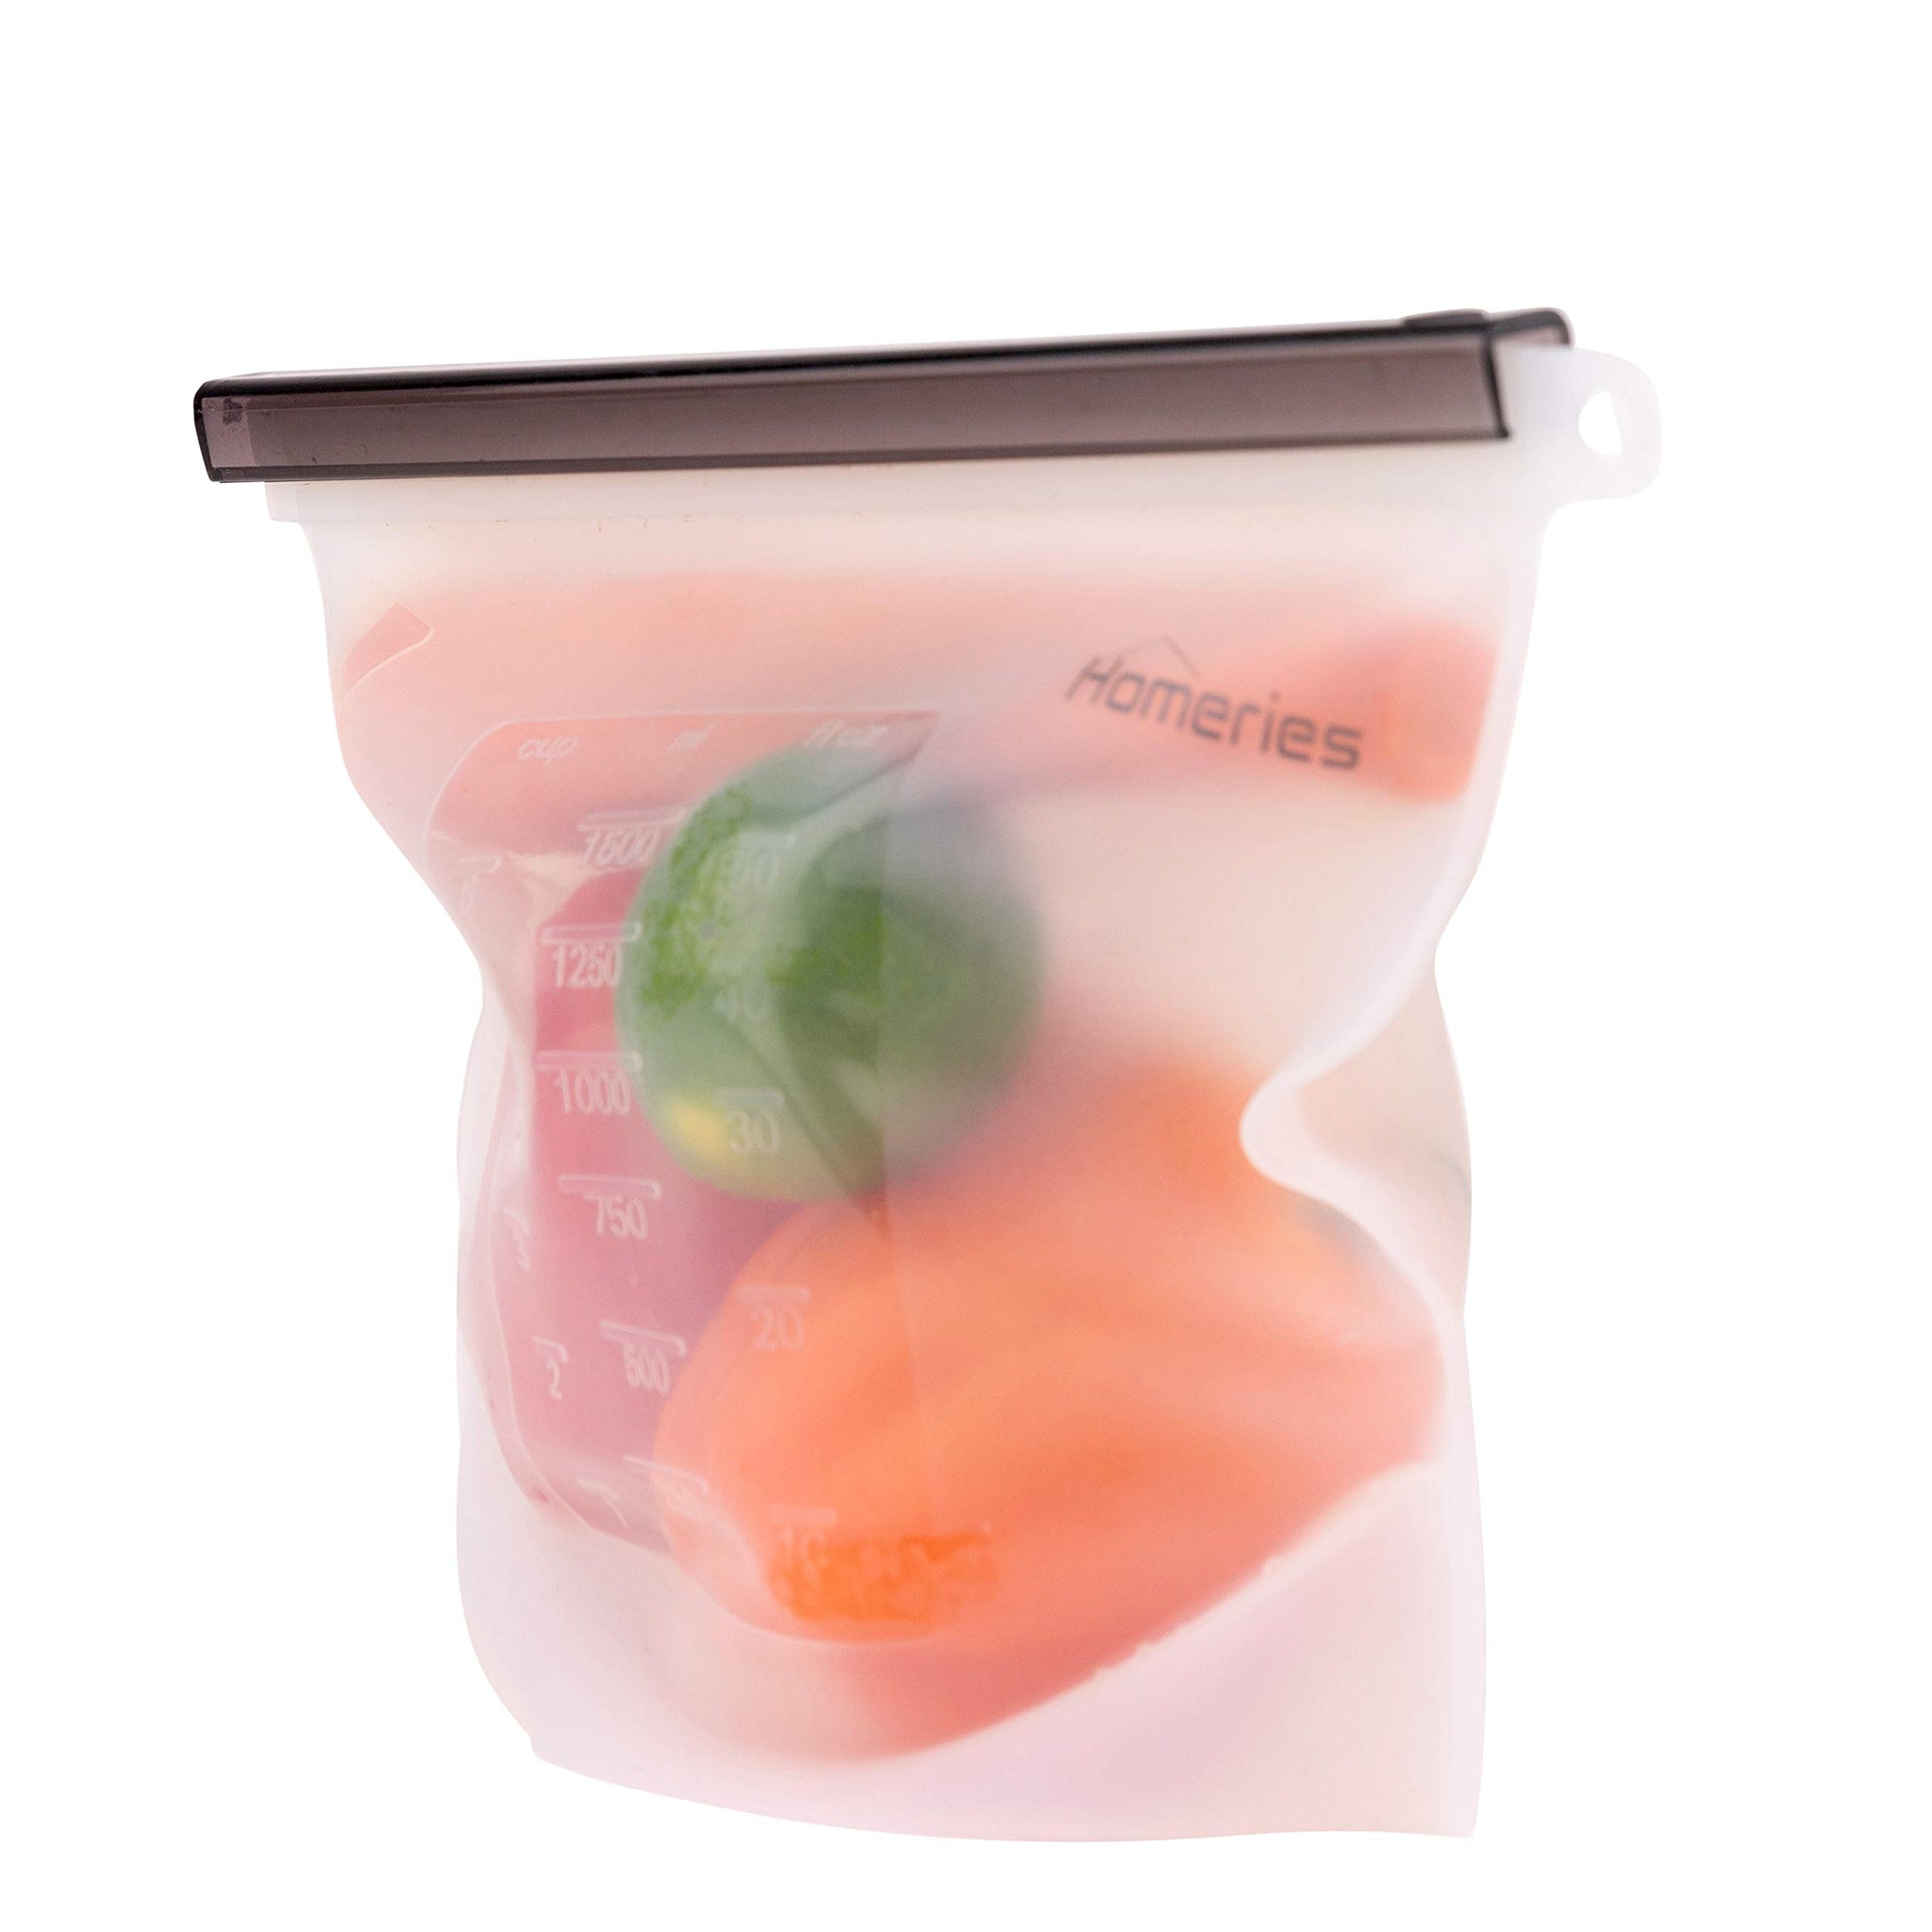 Homgreen 45 Pack Reusable Food Storage Bags - BPA Free Reusable